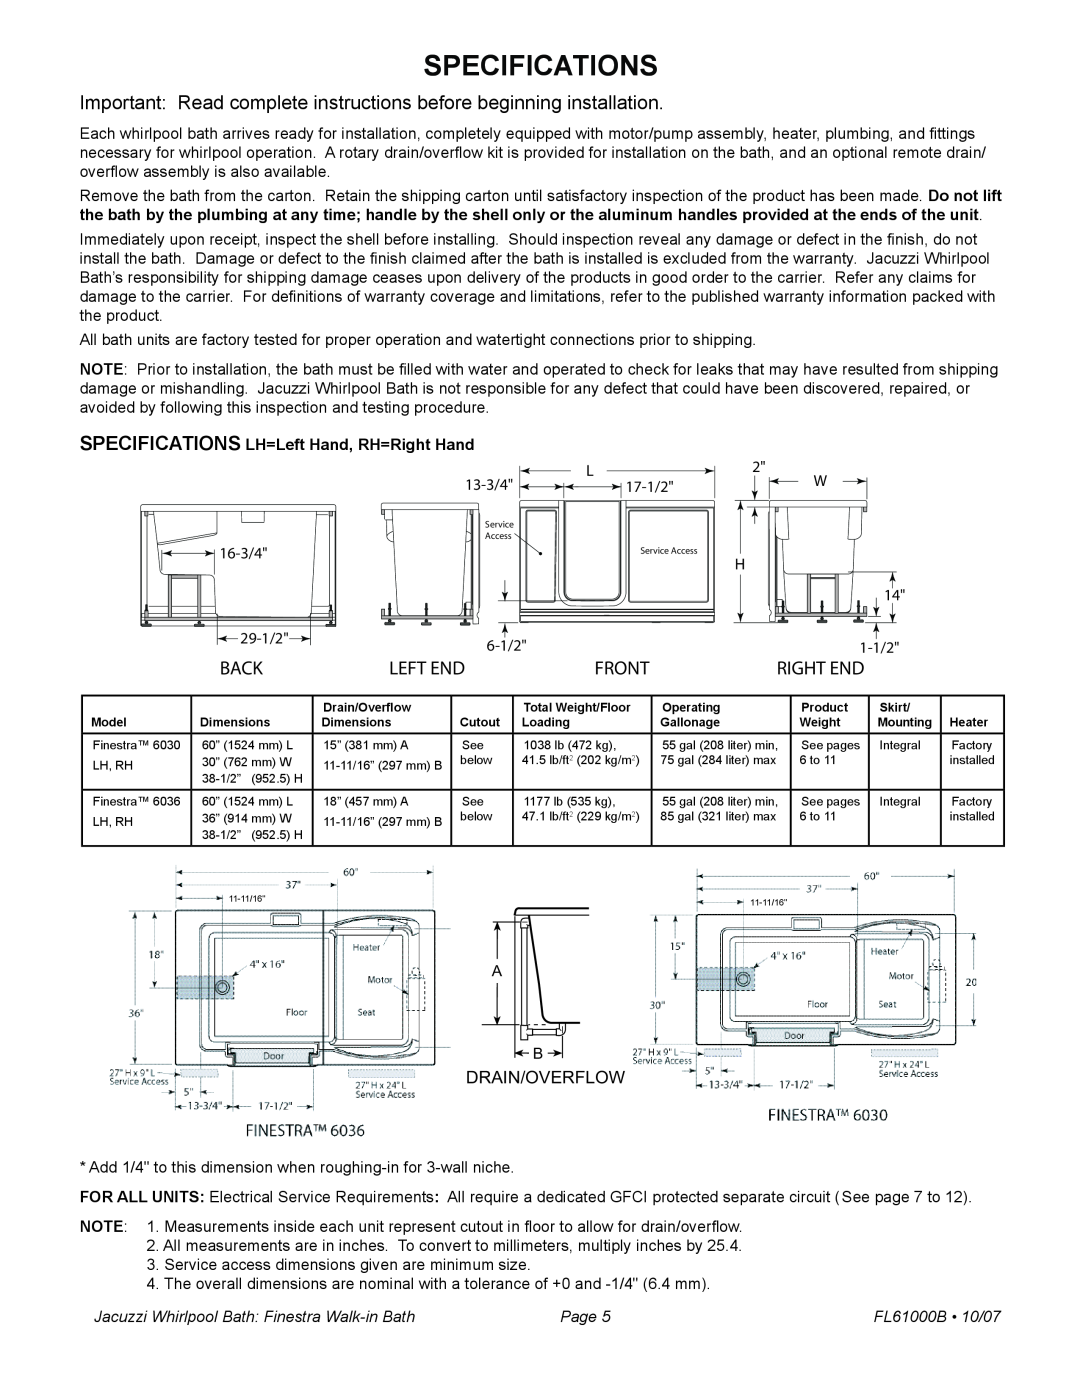 Jacuzzi FL61000 manual Specifications, Back, Left End, Jacuzzi Whirlpool Bath Finestra Walk-inBath, Page  